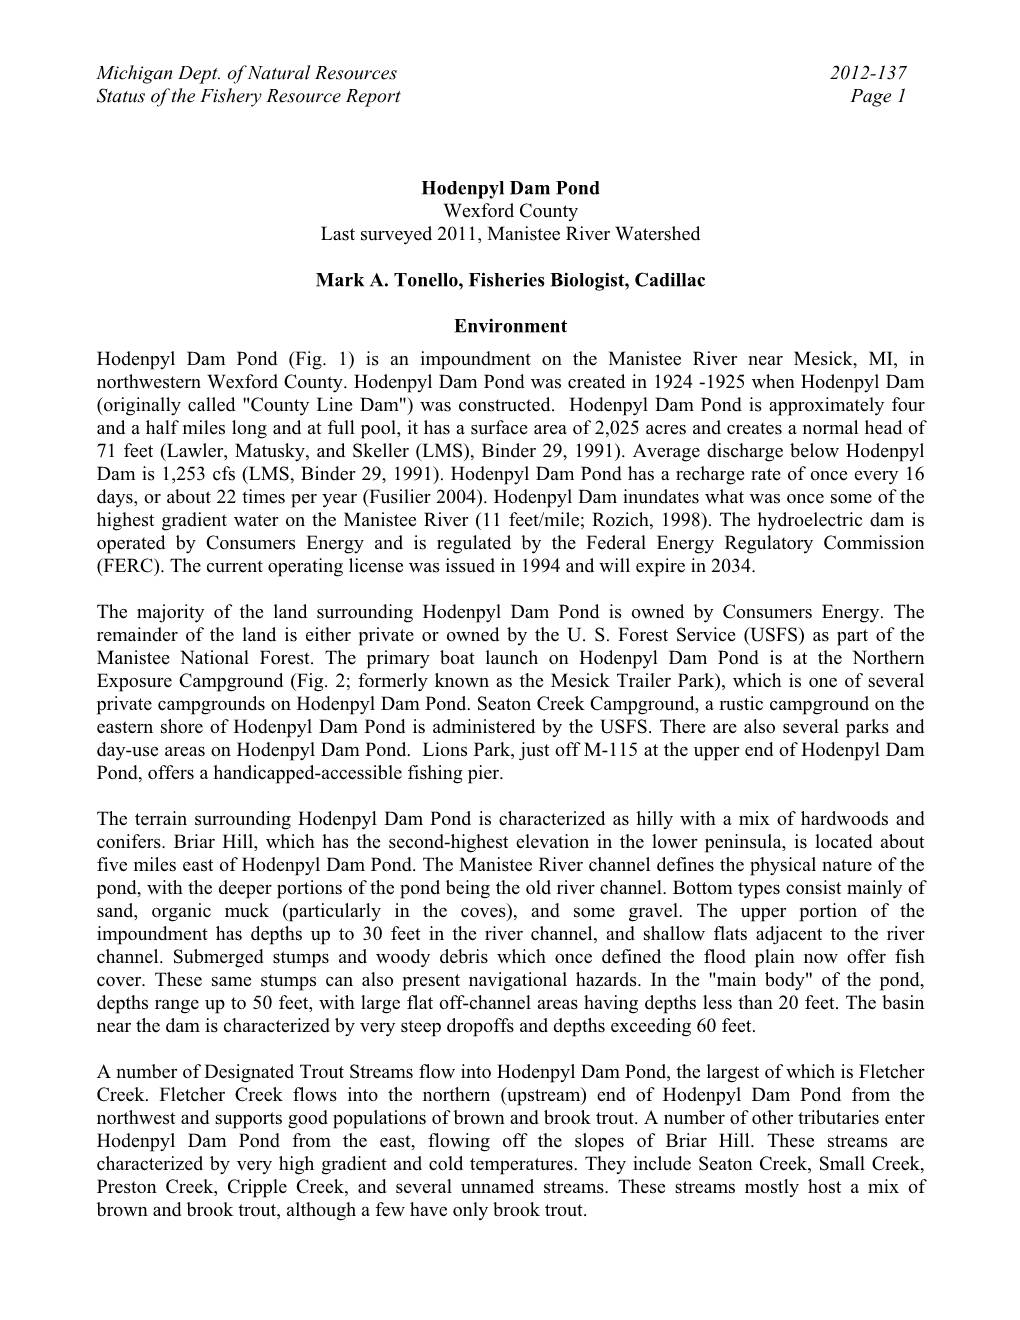 Hodenpyl Dam Pond Status of Fishery Report 2012-137